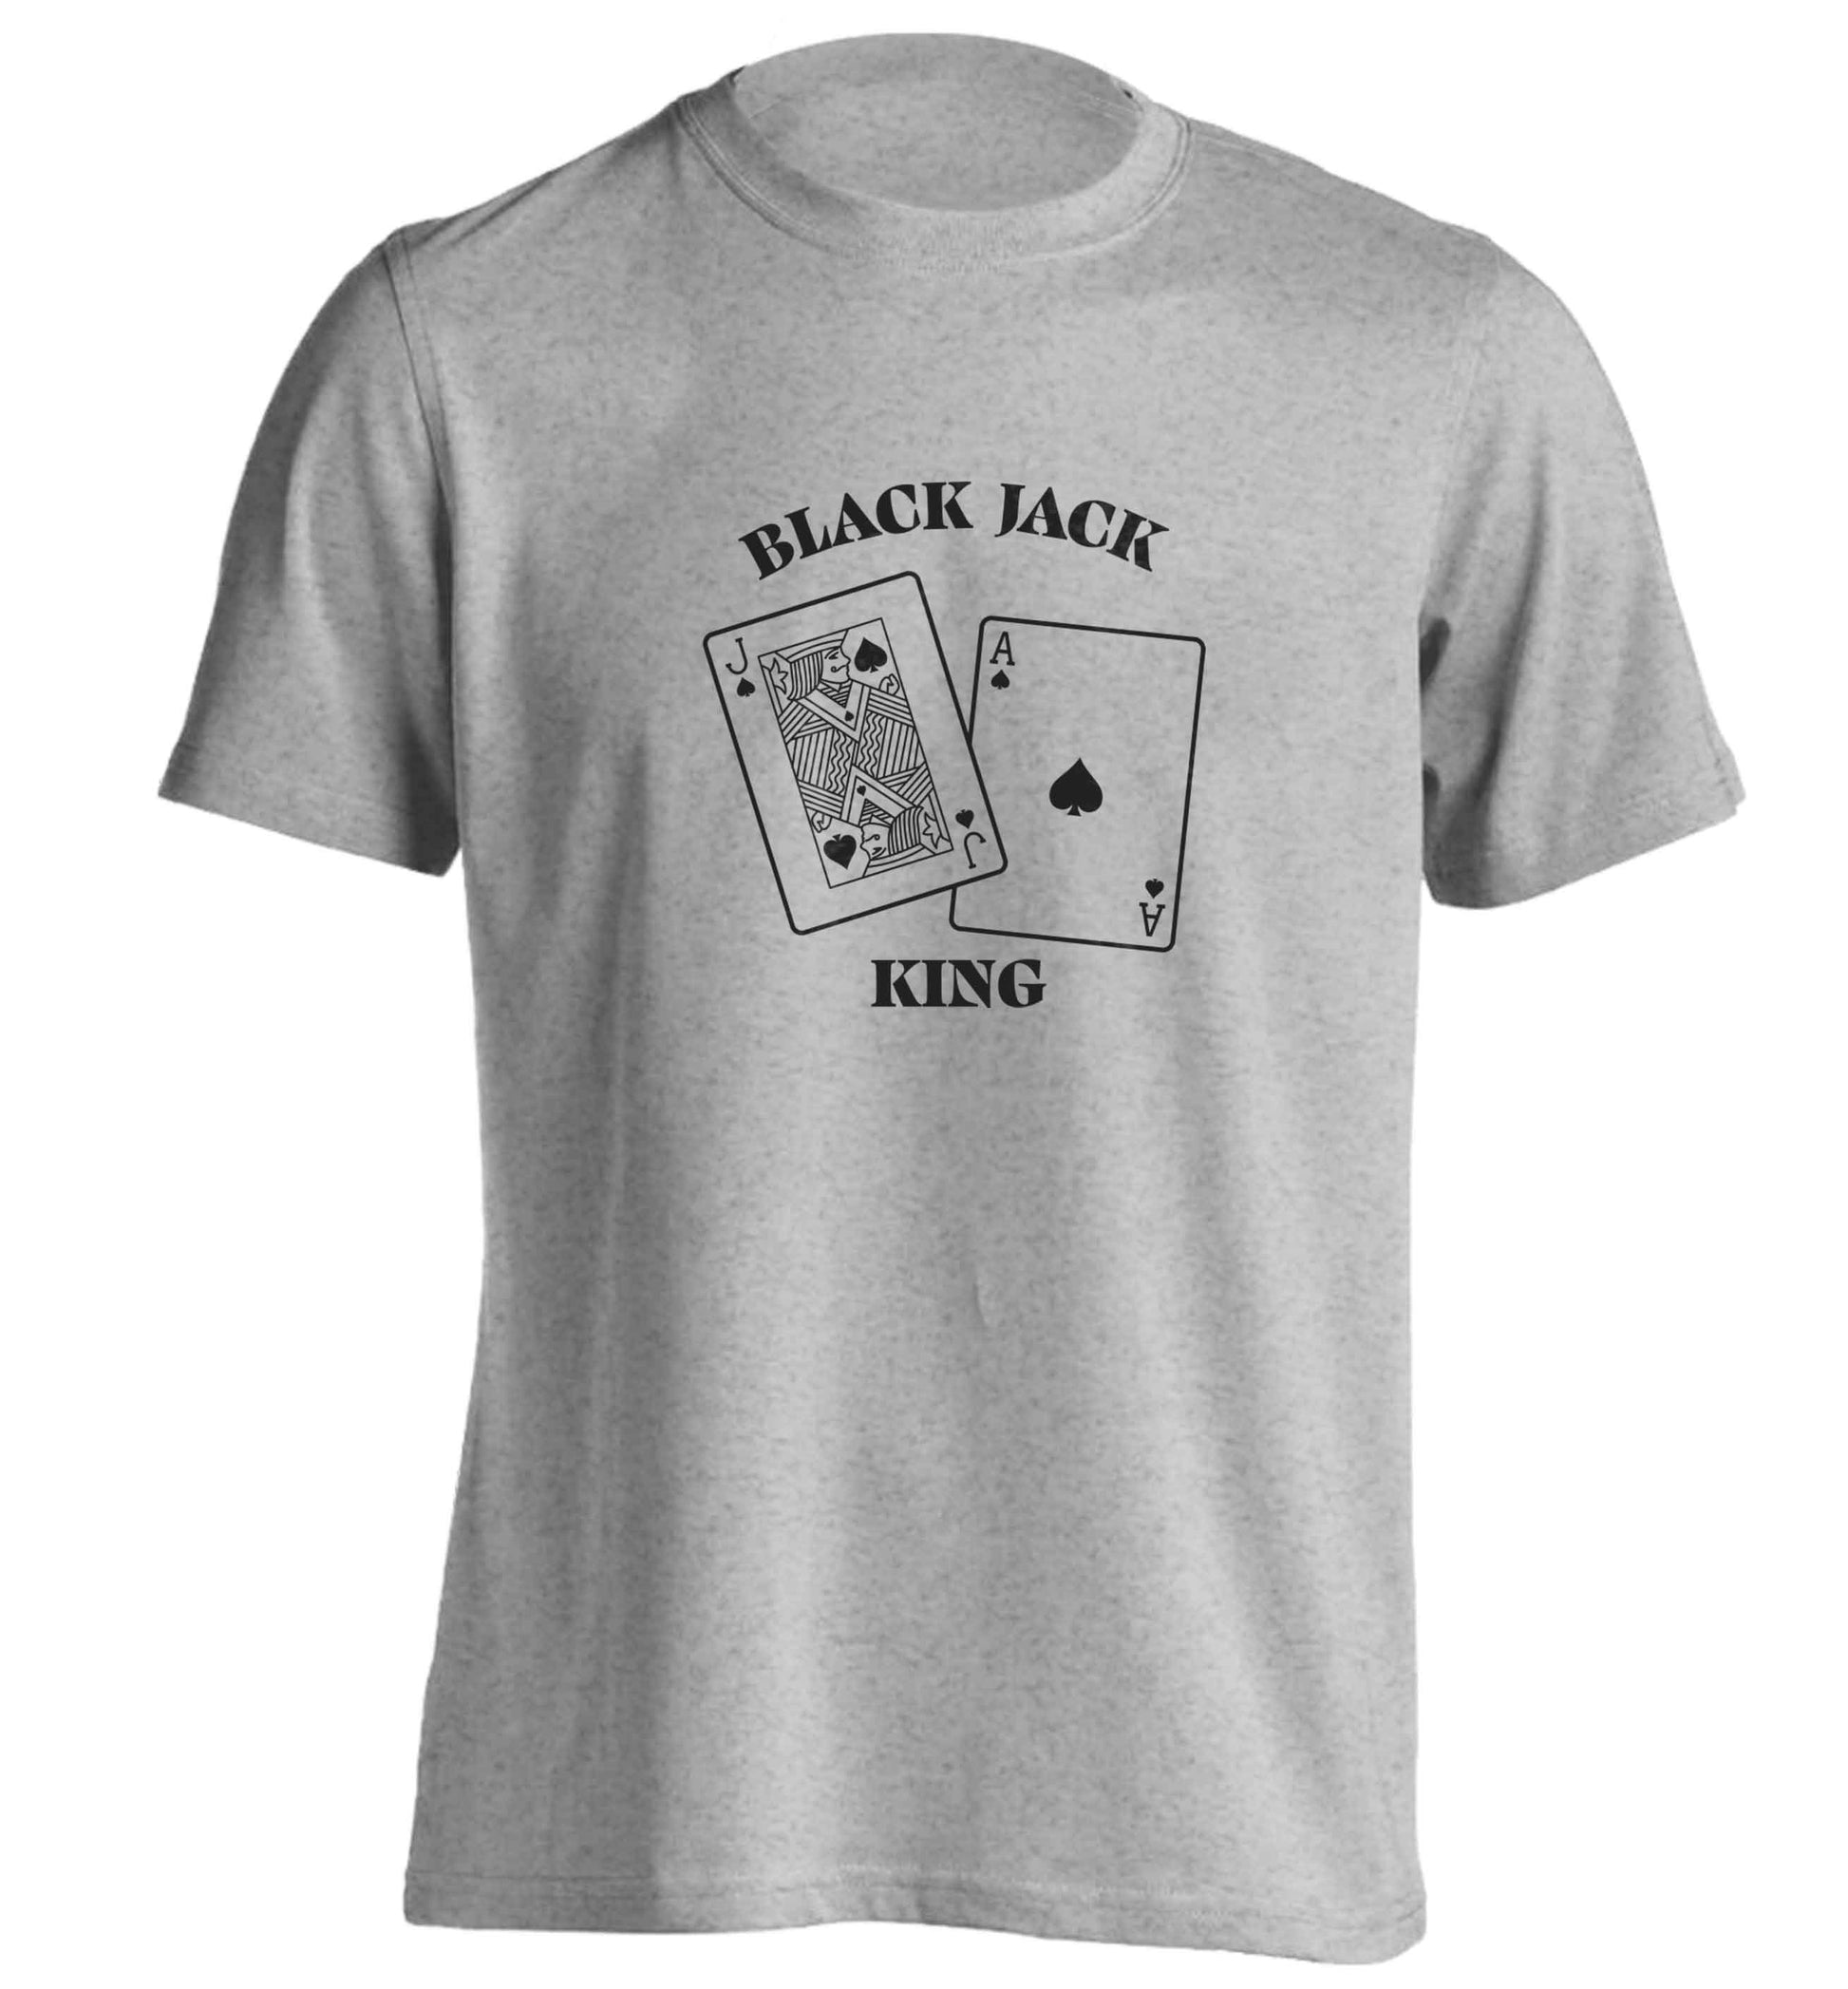 Blackjack king adults unisex grey Tshirt 2XL